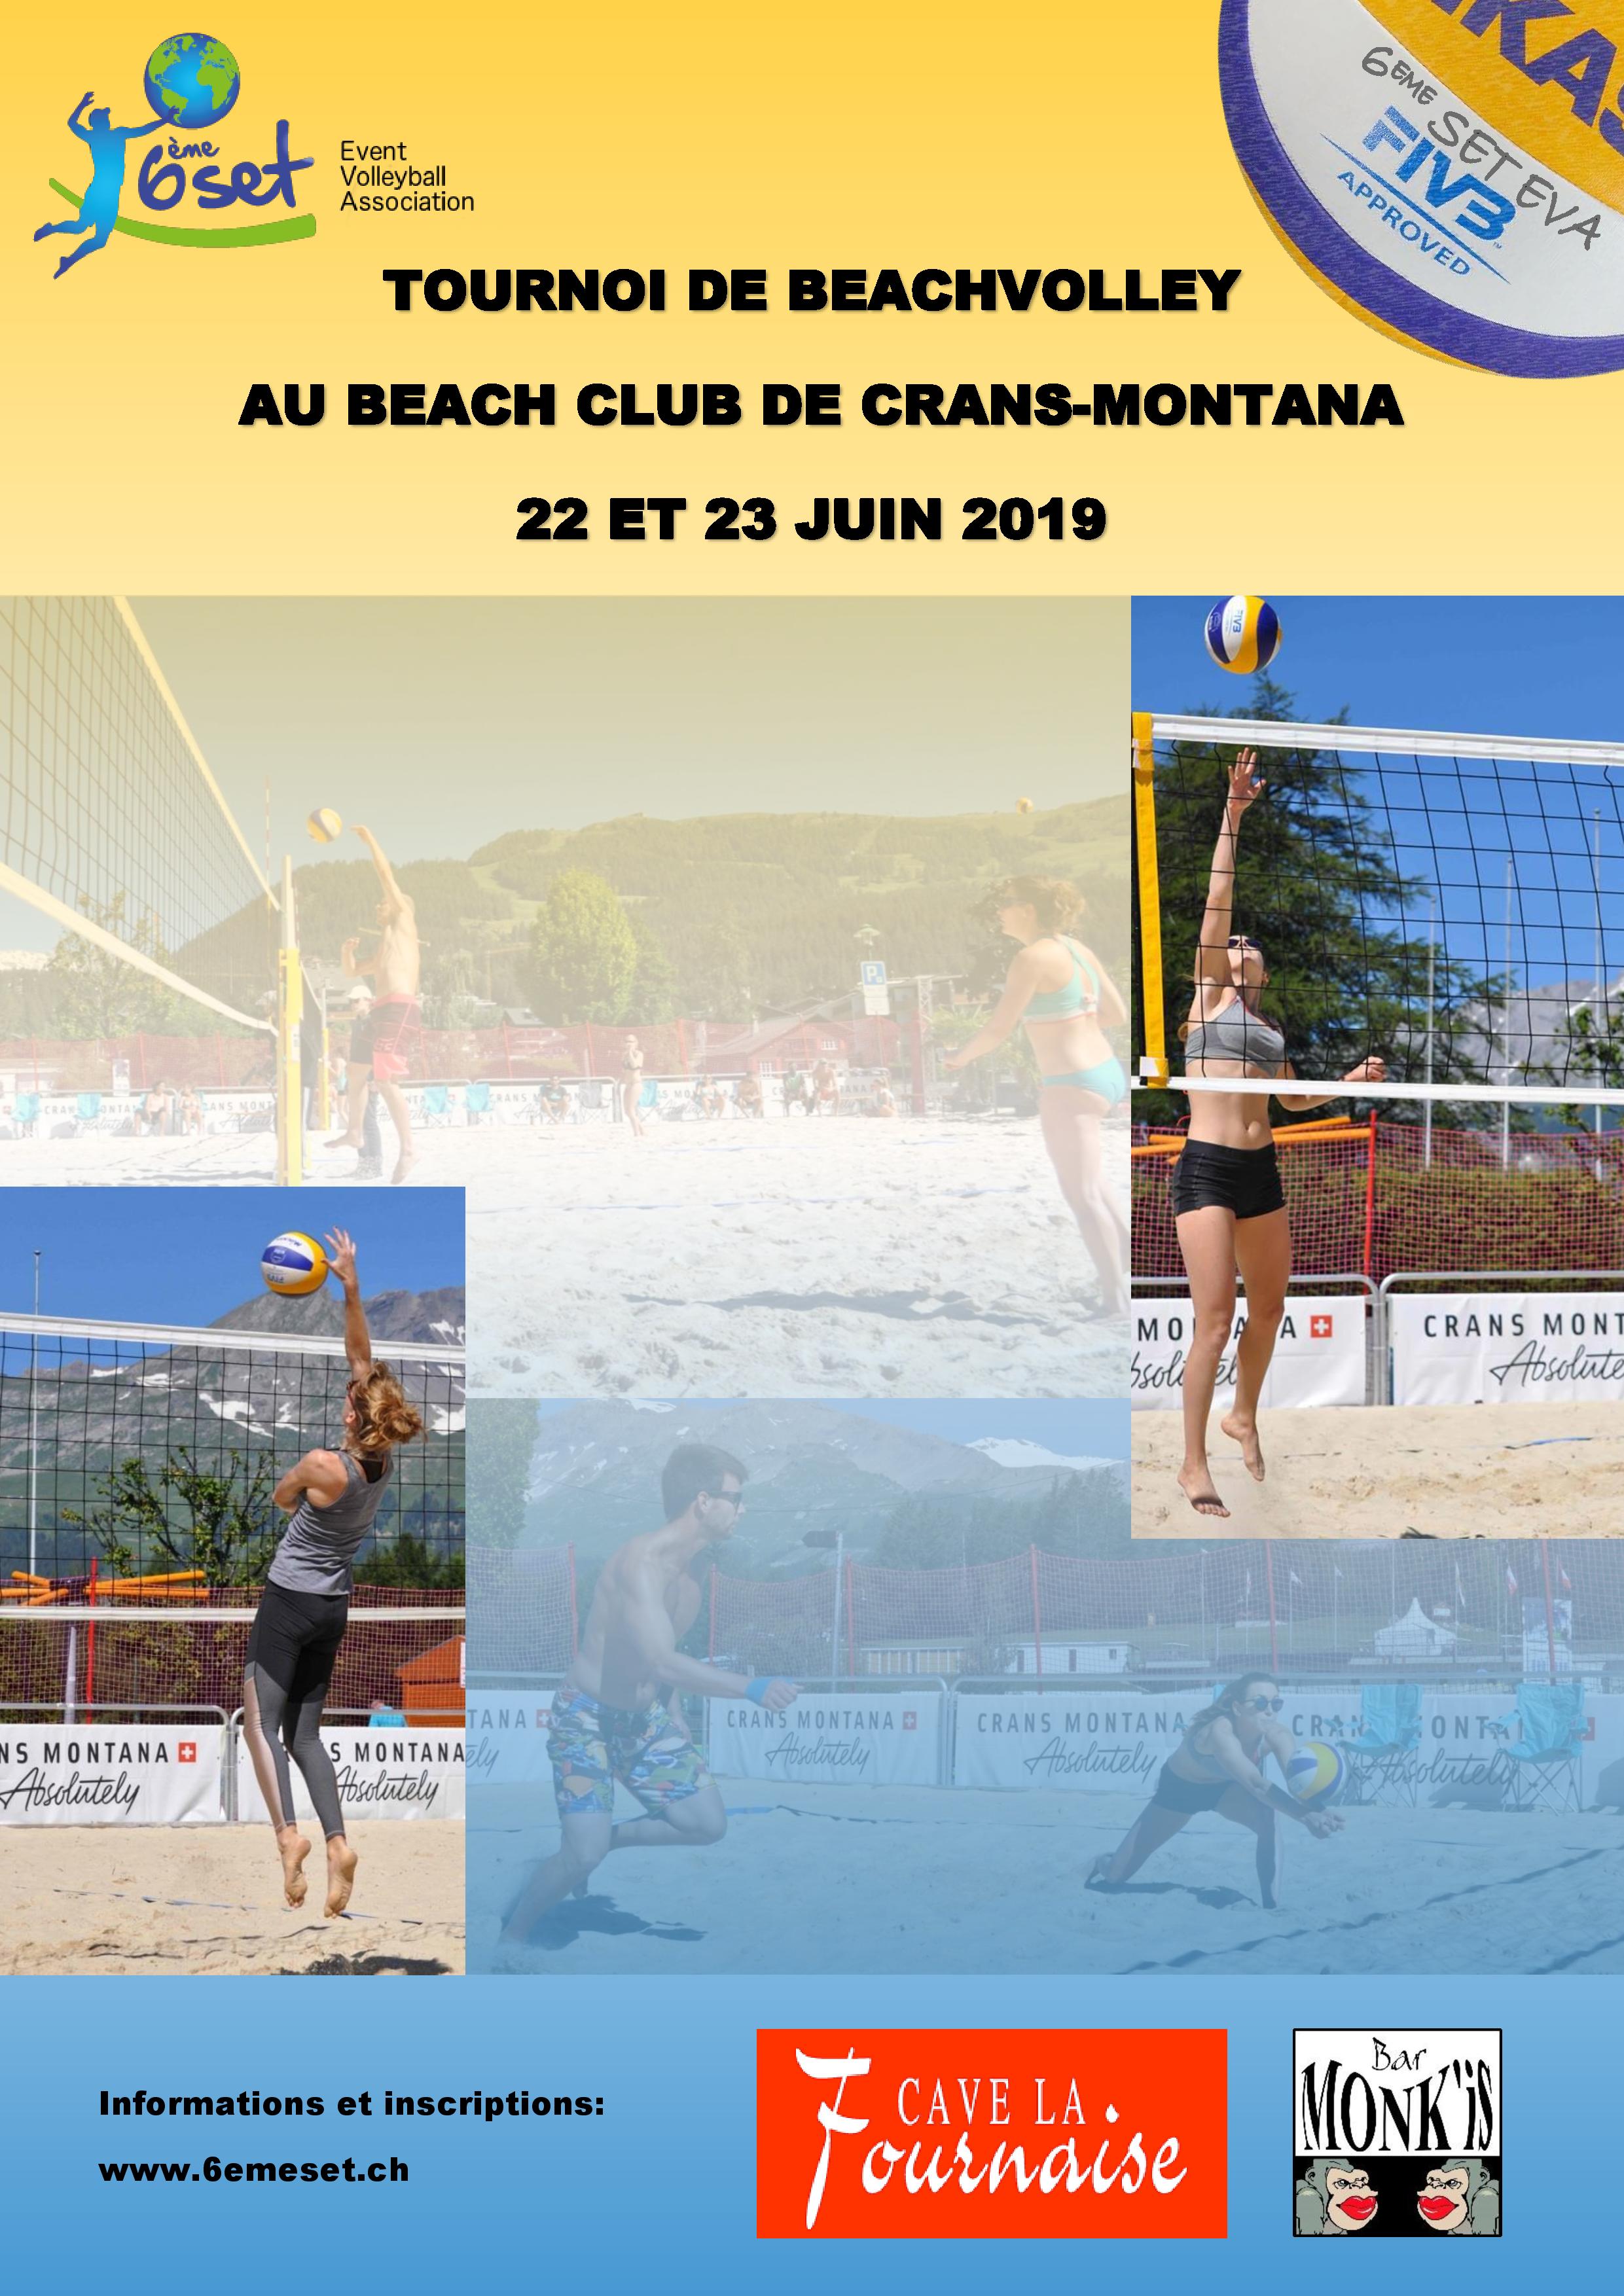 Tournoi de beach-volley, Crans-Montana, 22 et 23 juin 2019